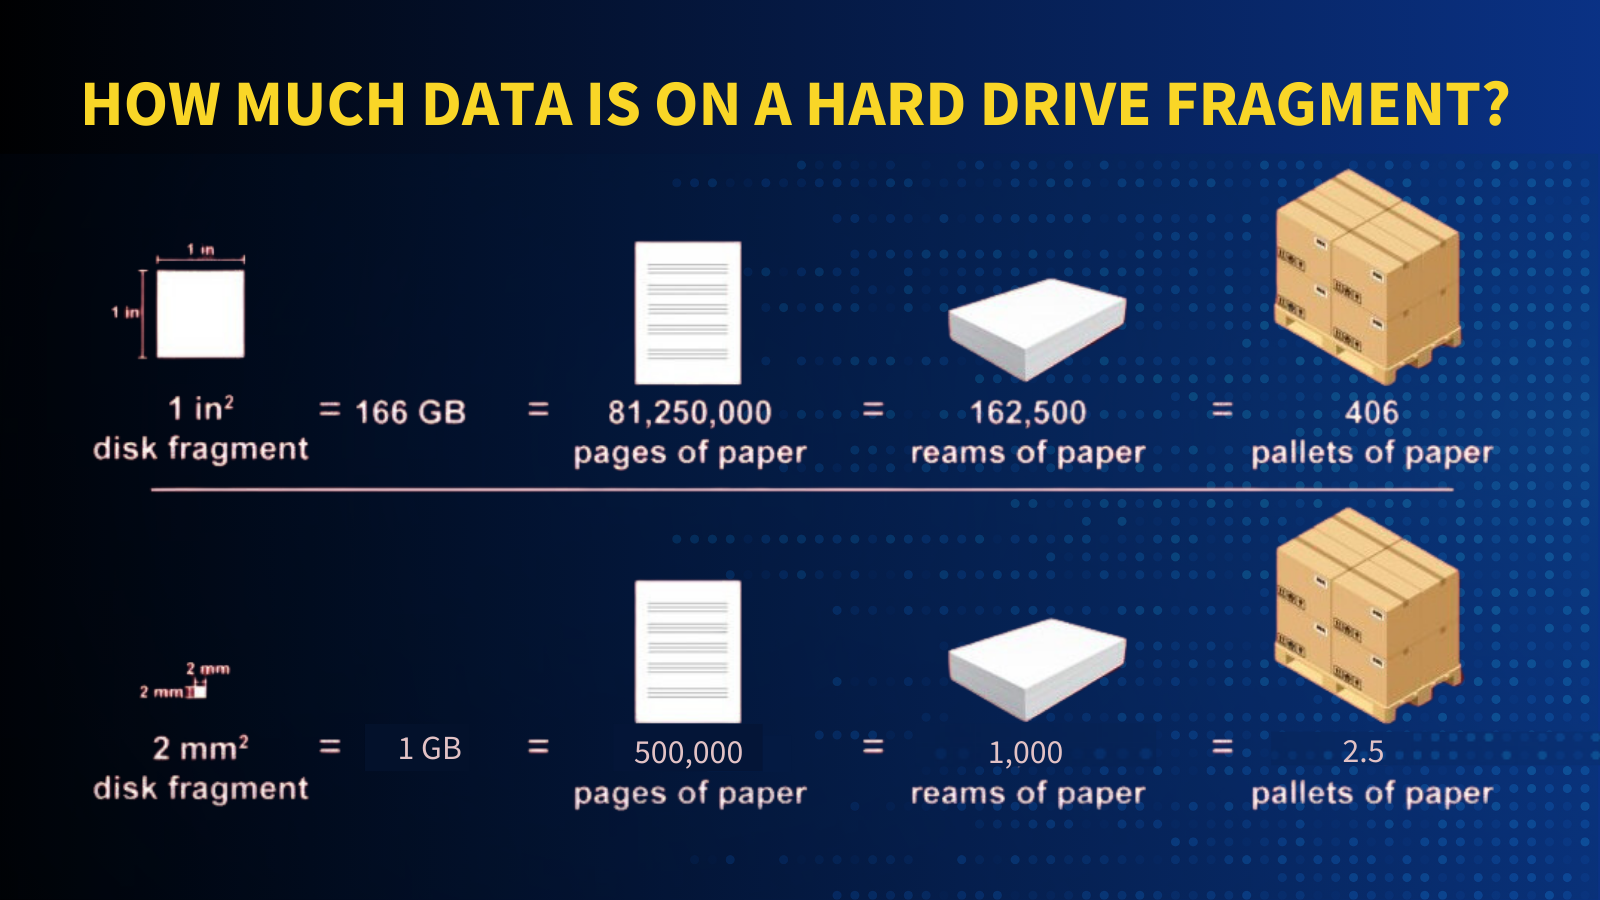 Data remnants on hard drive fragments